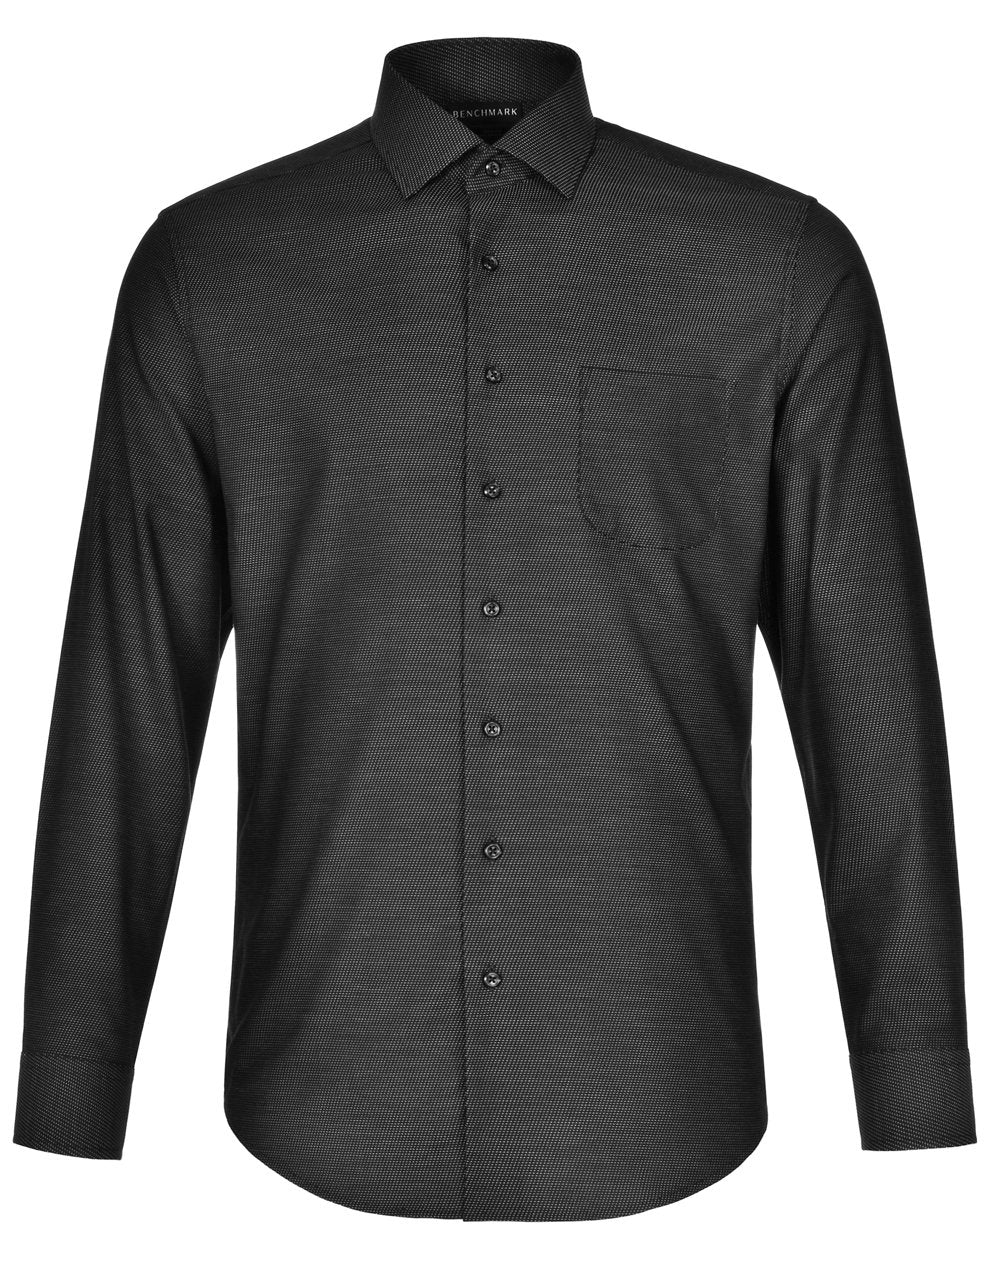 Mens Dot Jacquard Stretch Long Sleeve Ascot Shirt M7400L Casual Wear Winning Spirit Black XS 